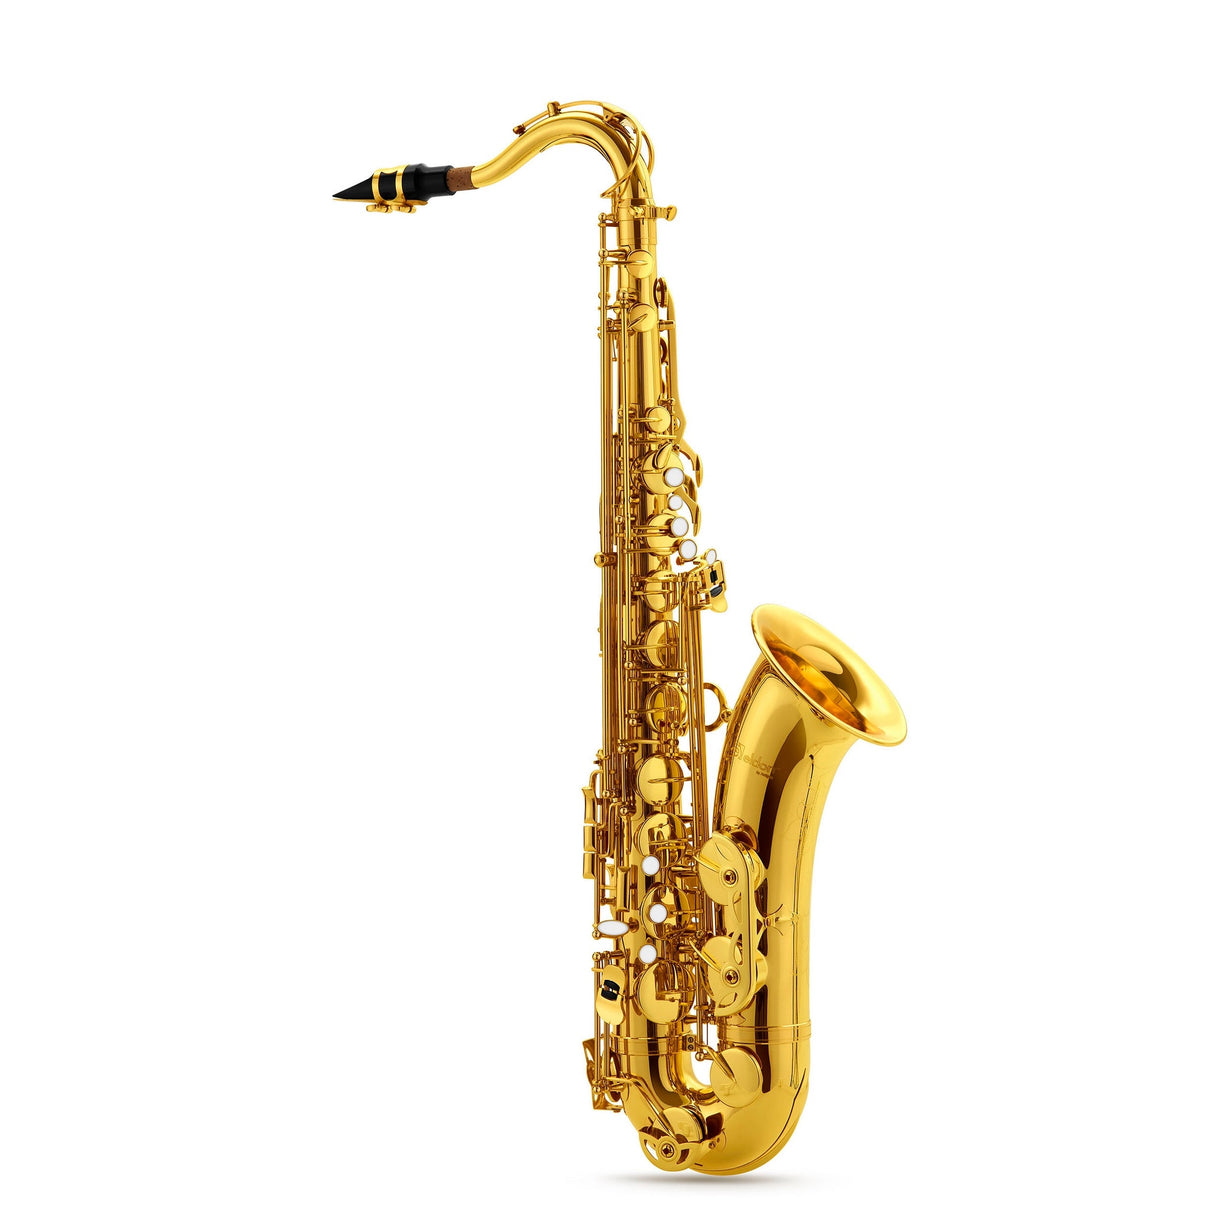 Eldon TS-22 Bb Tenor Saxophone with Detachable Key Guards, Lacquer Finish